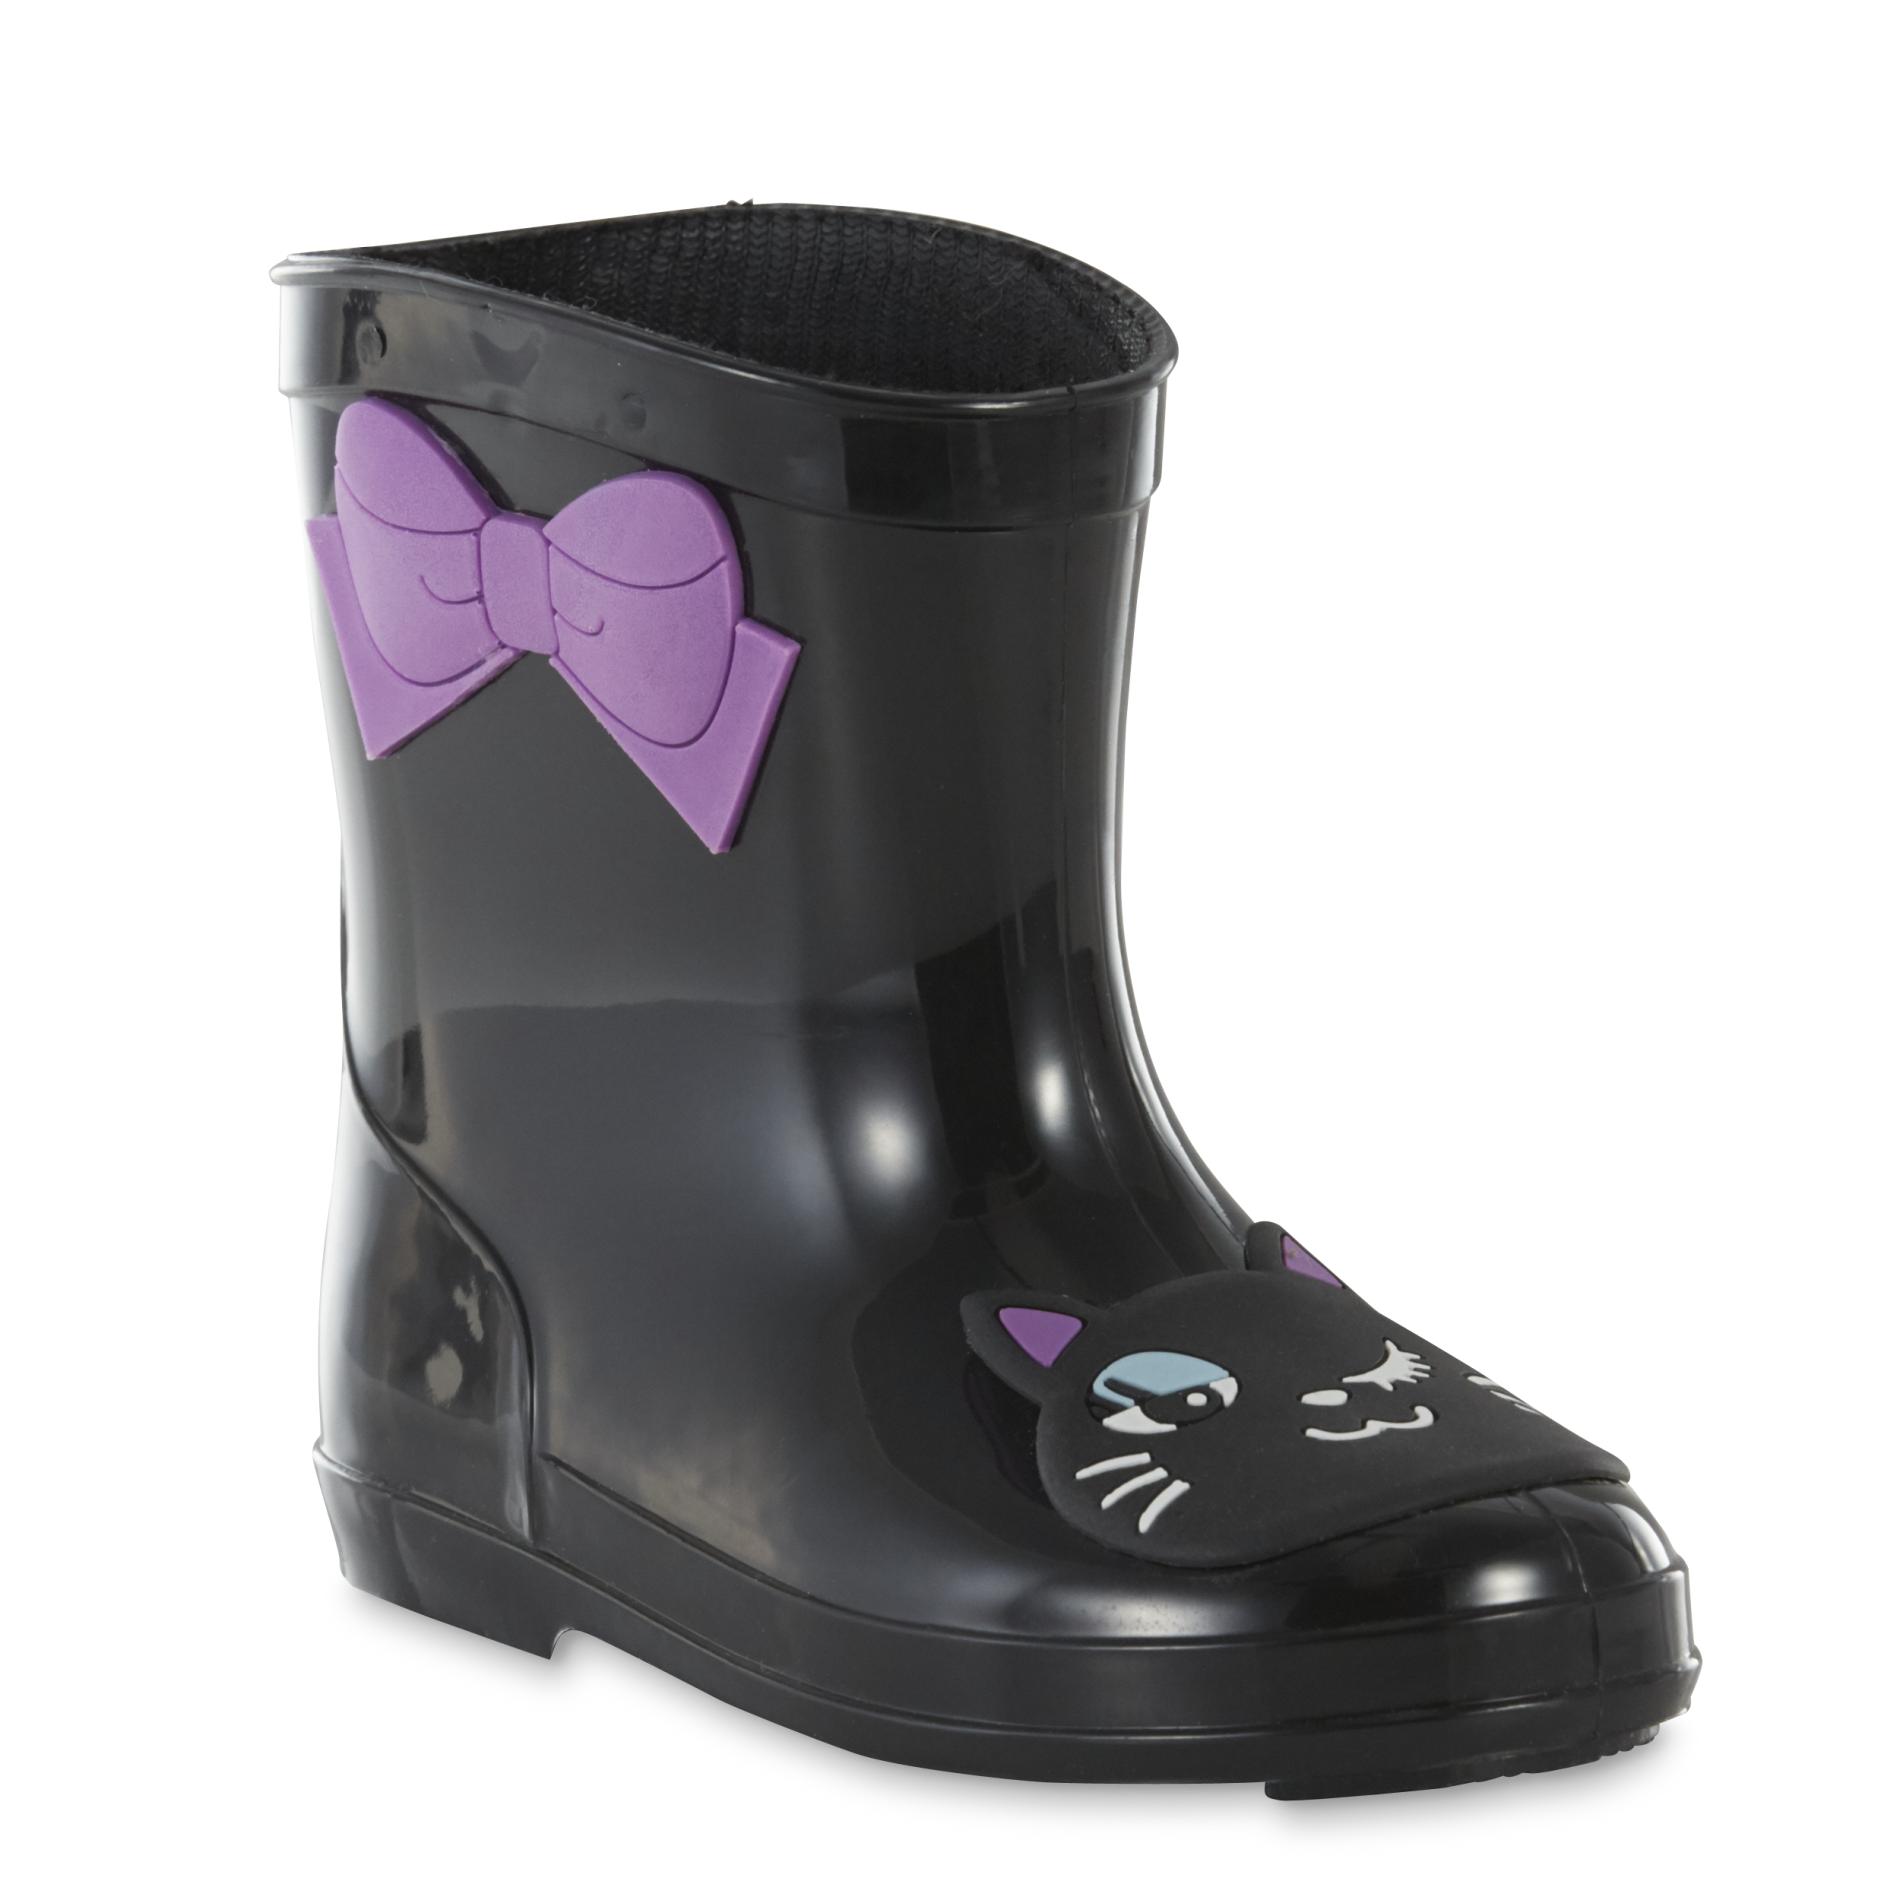 Personal Identity Toddler Girl's Black/Kitty Rain Boot